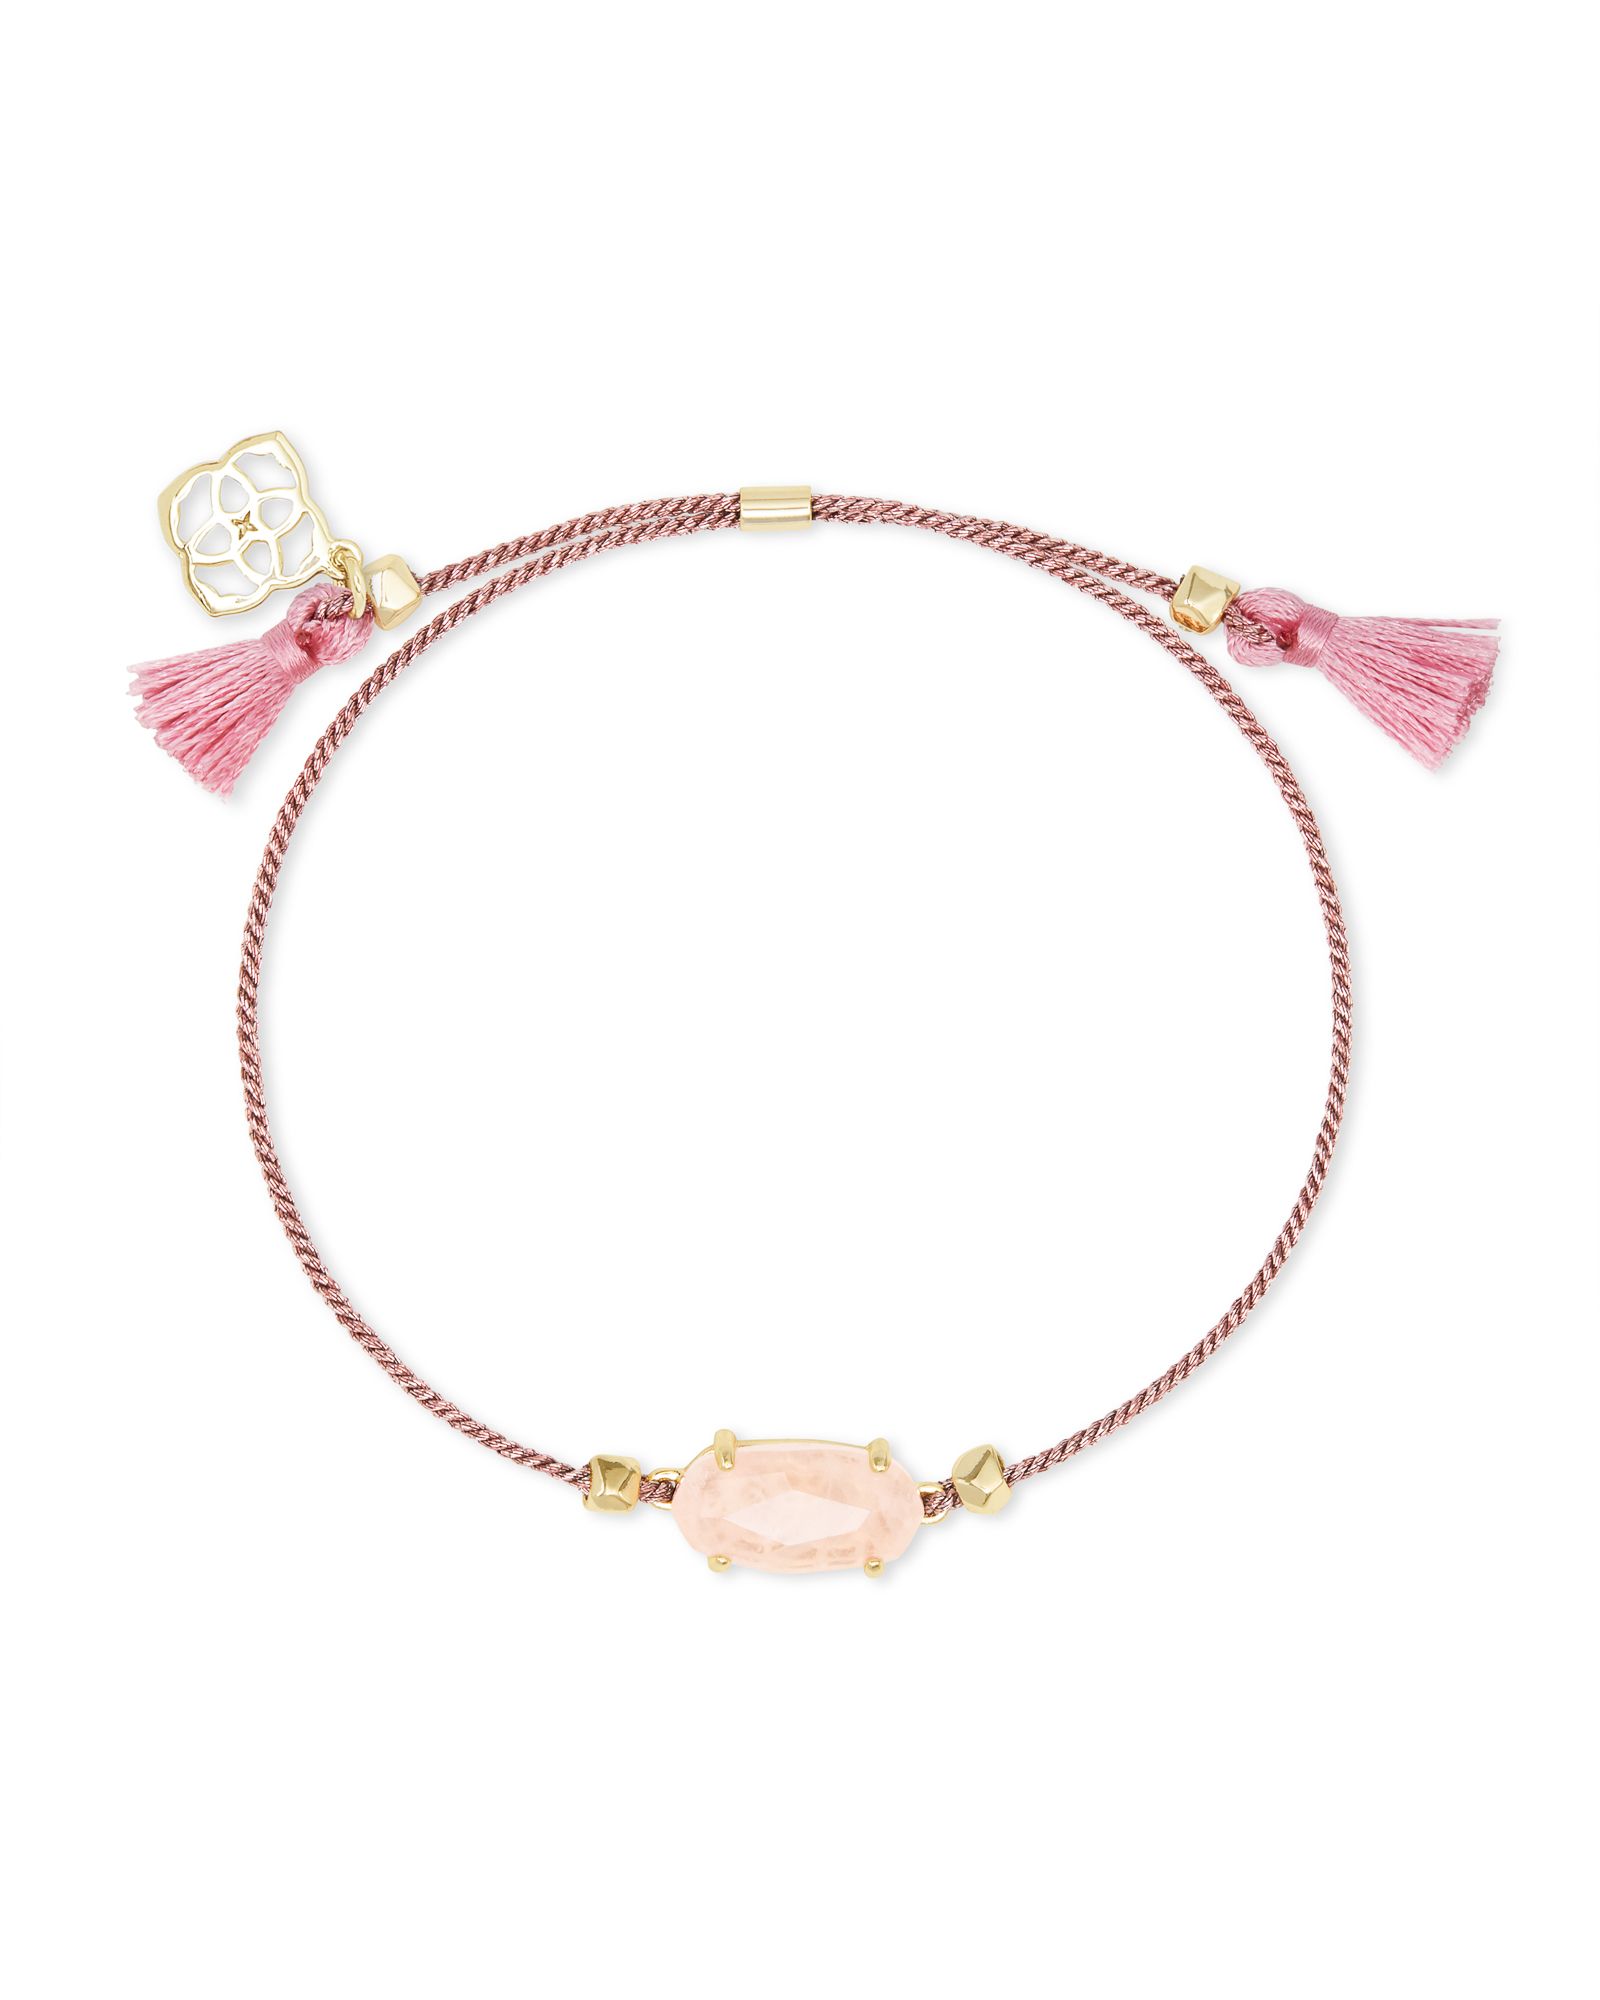 Everlyne Pink Cord Friendship Bracelet in Rose Quartz | Kendra Scott | Kendra Scott